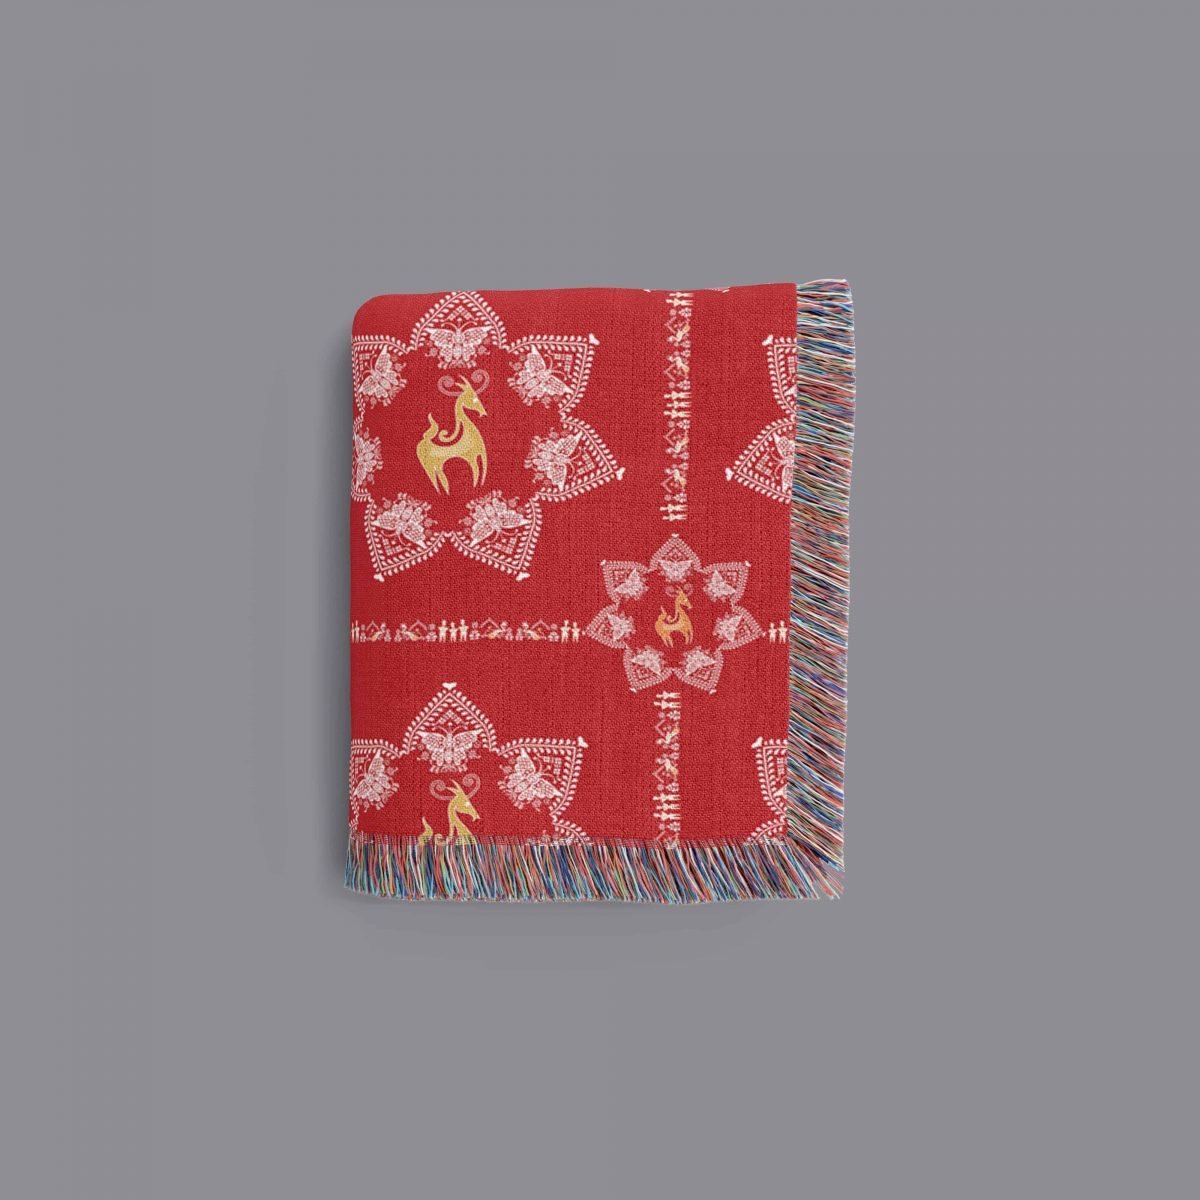 Quilt design 9 Red 01 Folded 2